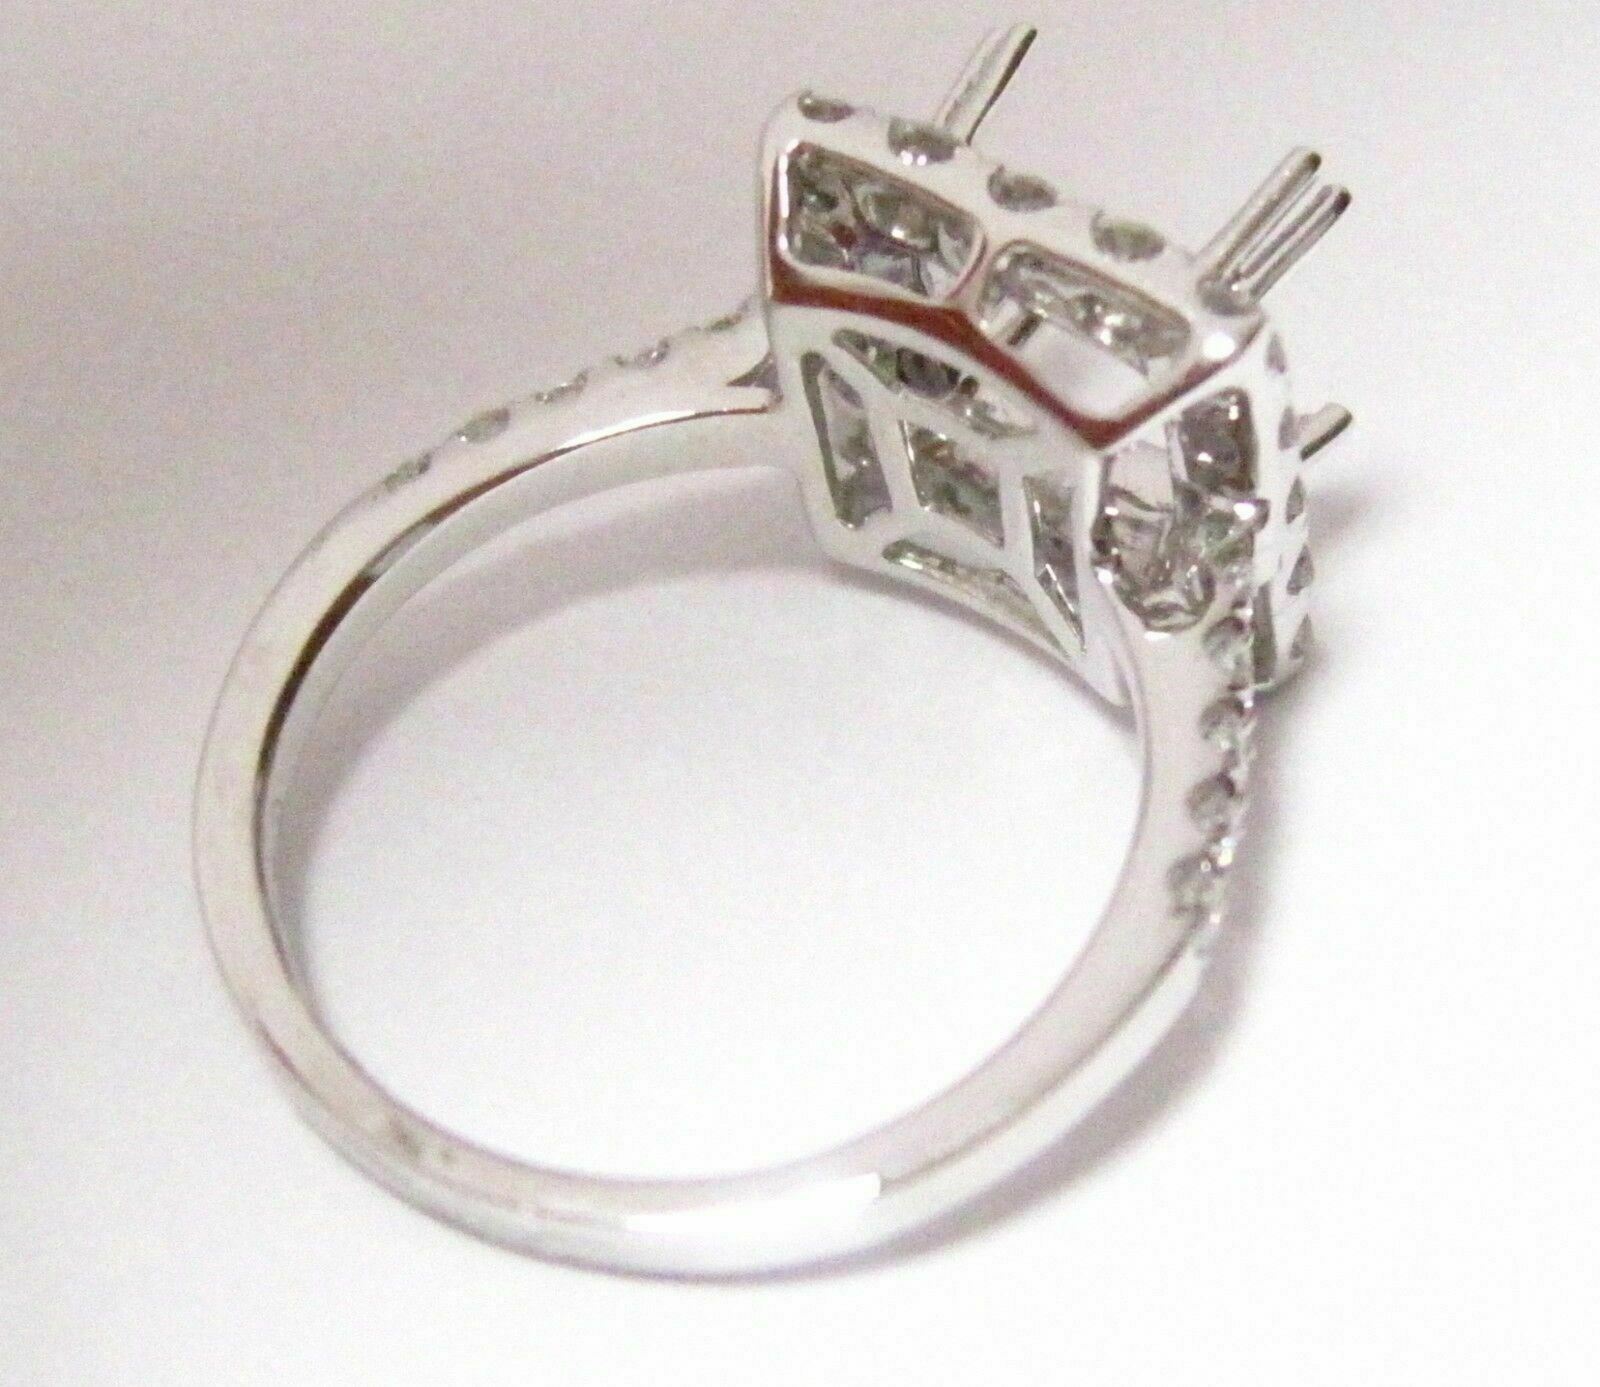 4 Prongs Semi-Mounting Engagement Ring For Princess or Cushion Diamond 18k W/G